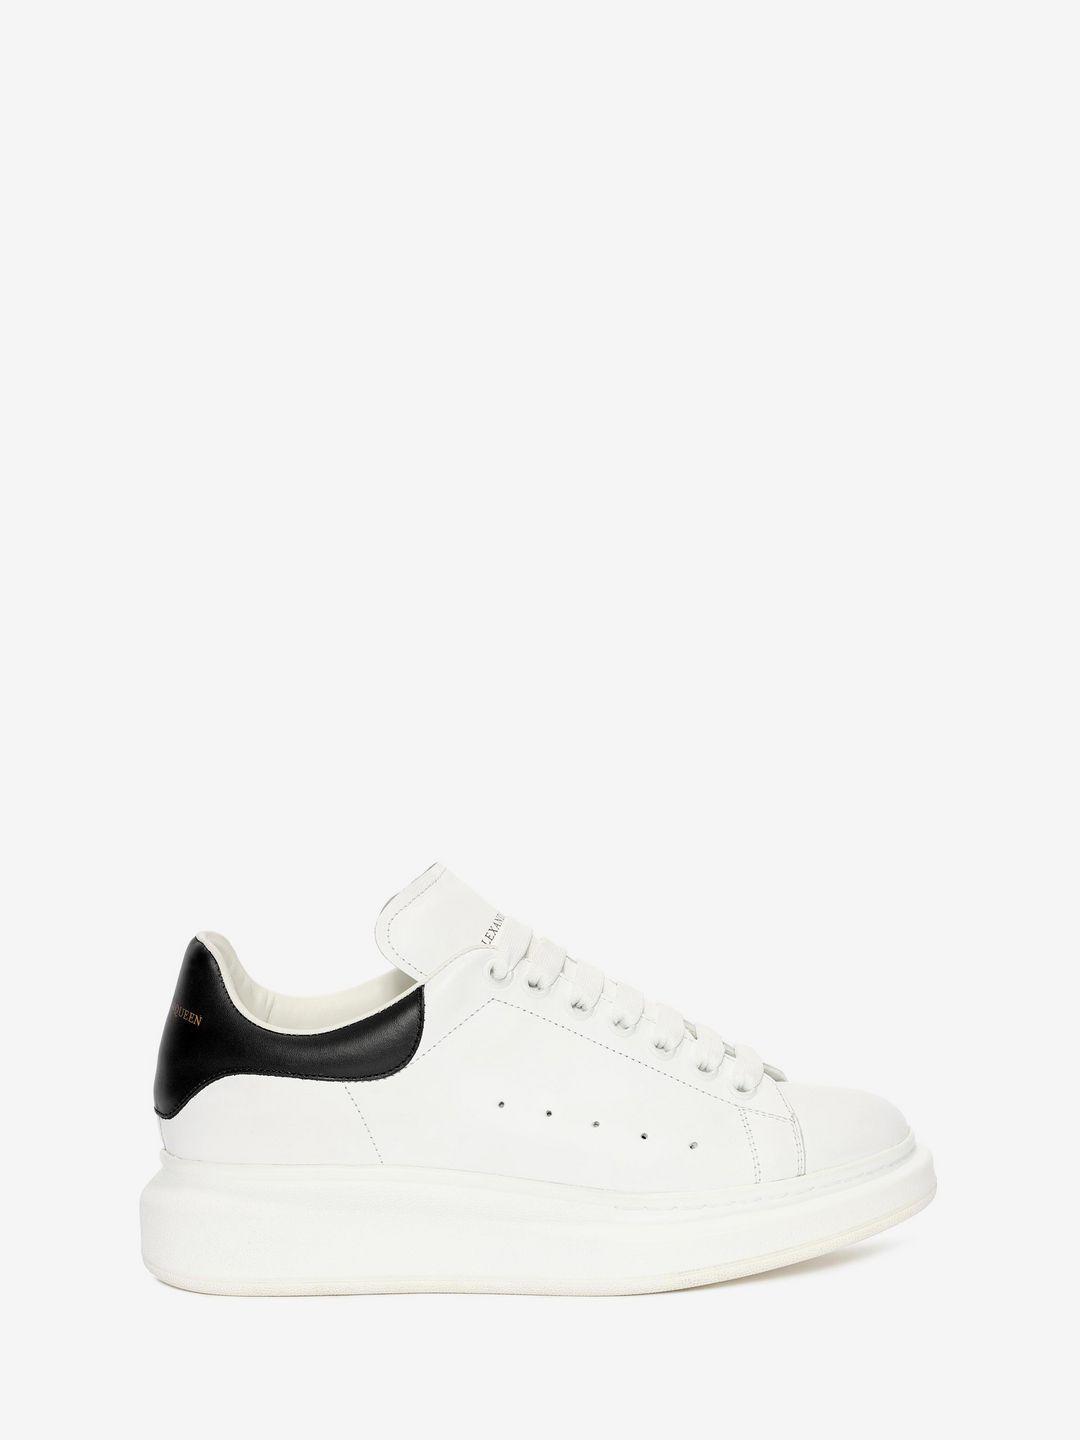 Alexander McQueen Leather Sneaker Pelle S.gomma in Ivory/Black (White ...